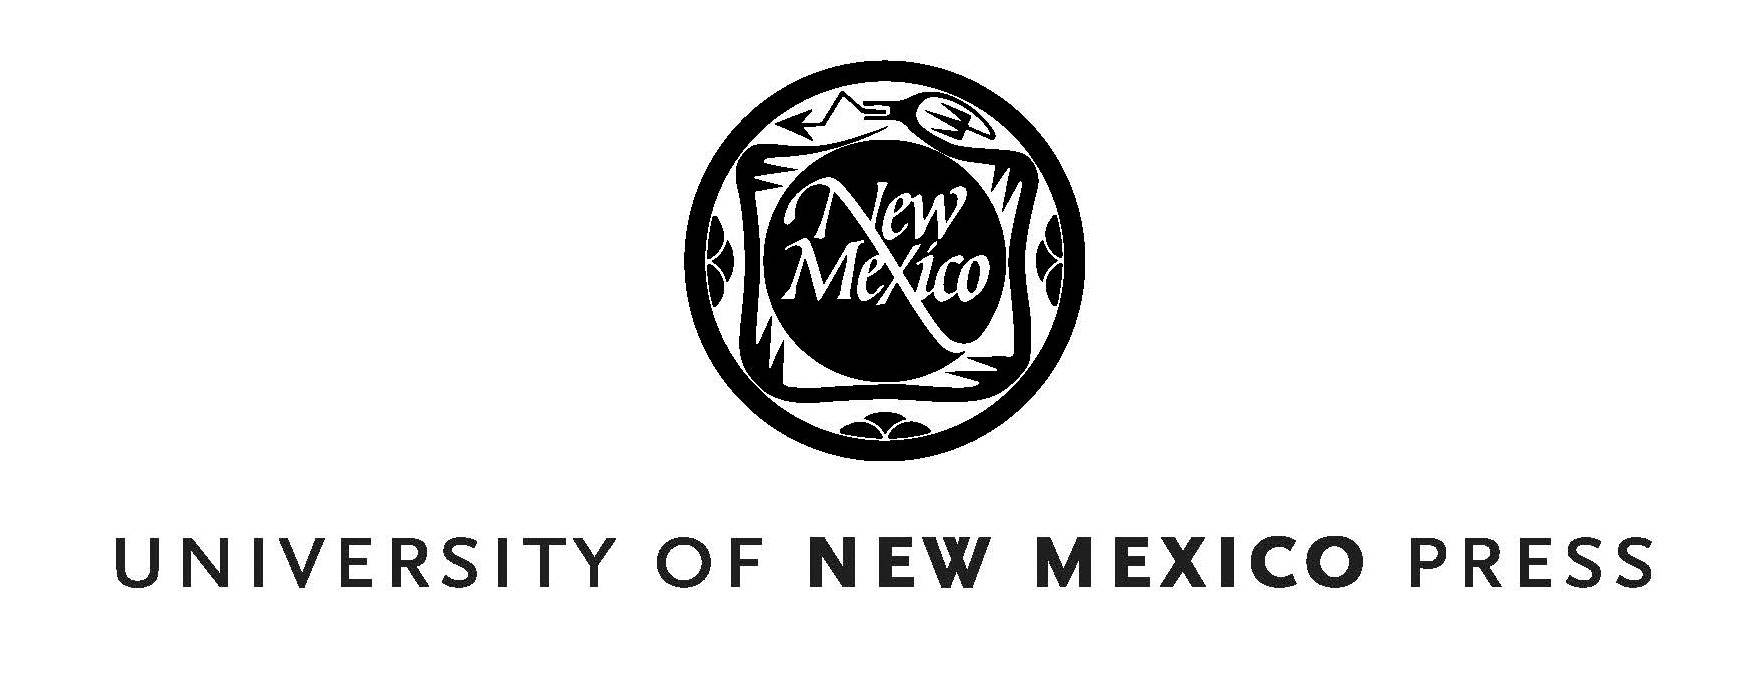 Logoder University Of New Mexico Press Wallpaper